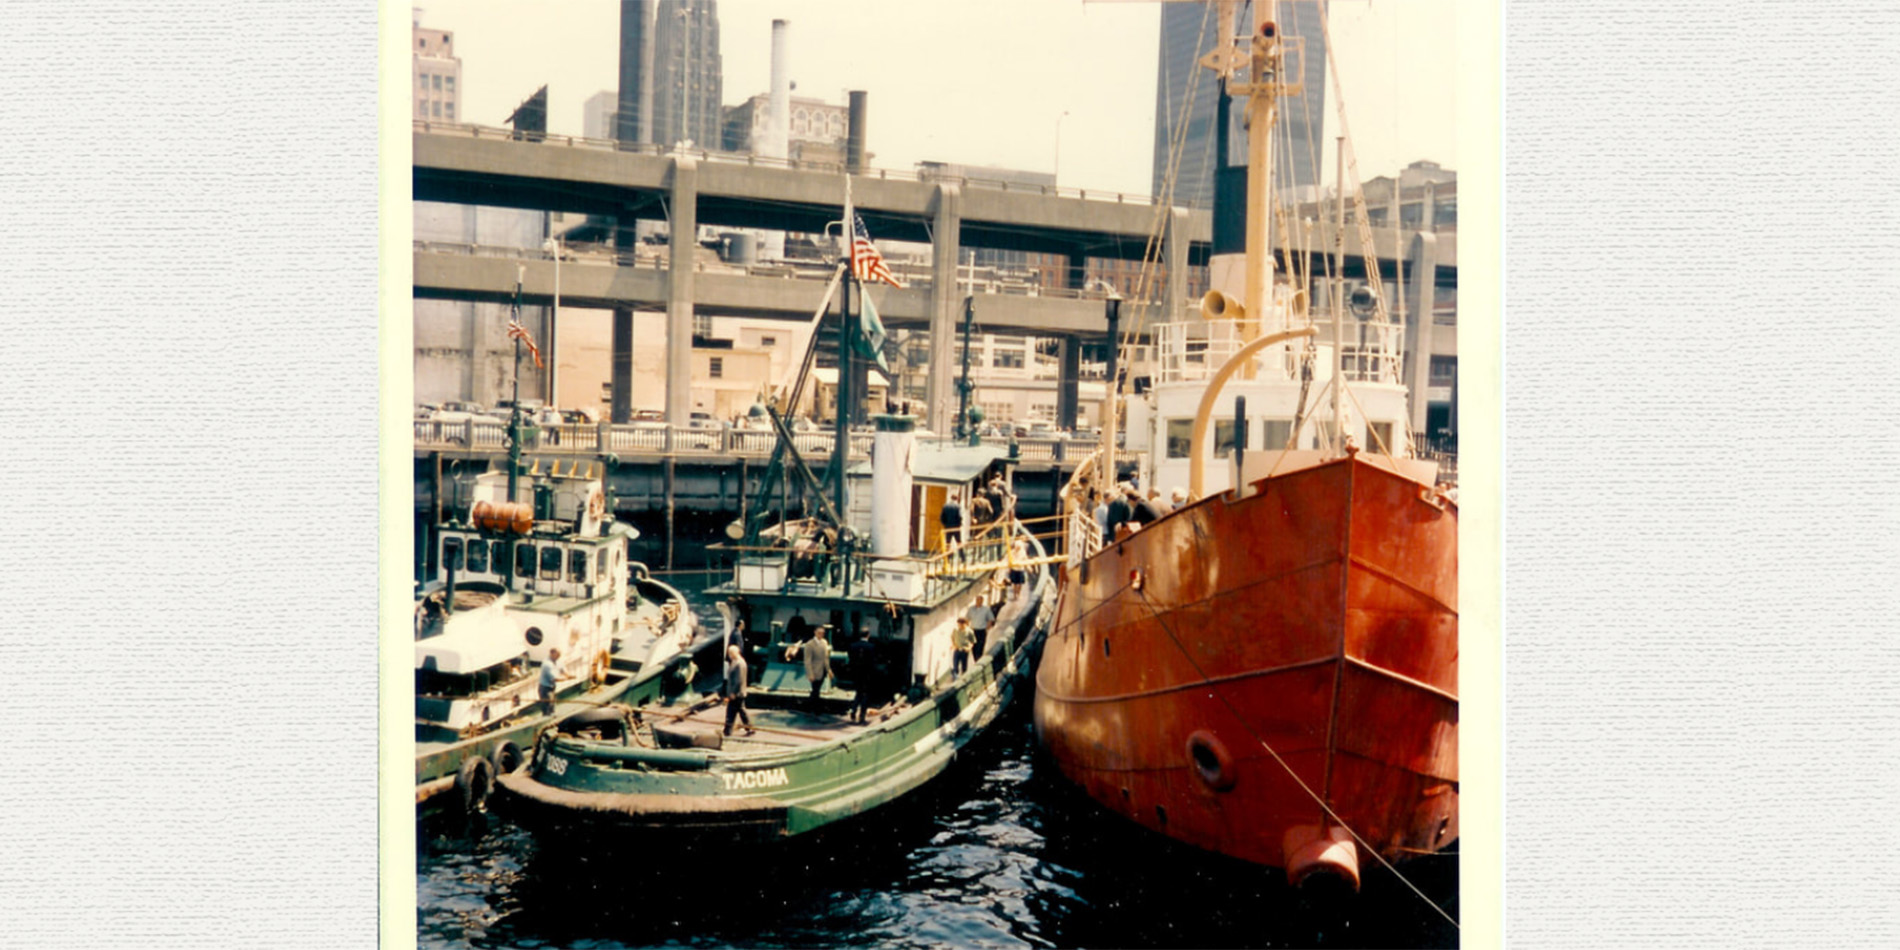 vintage image of boats